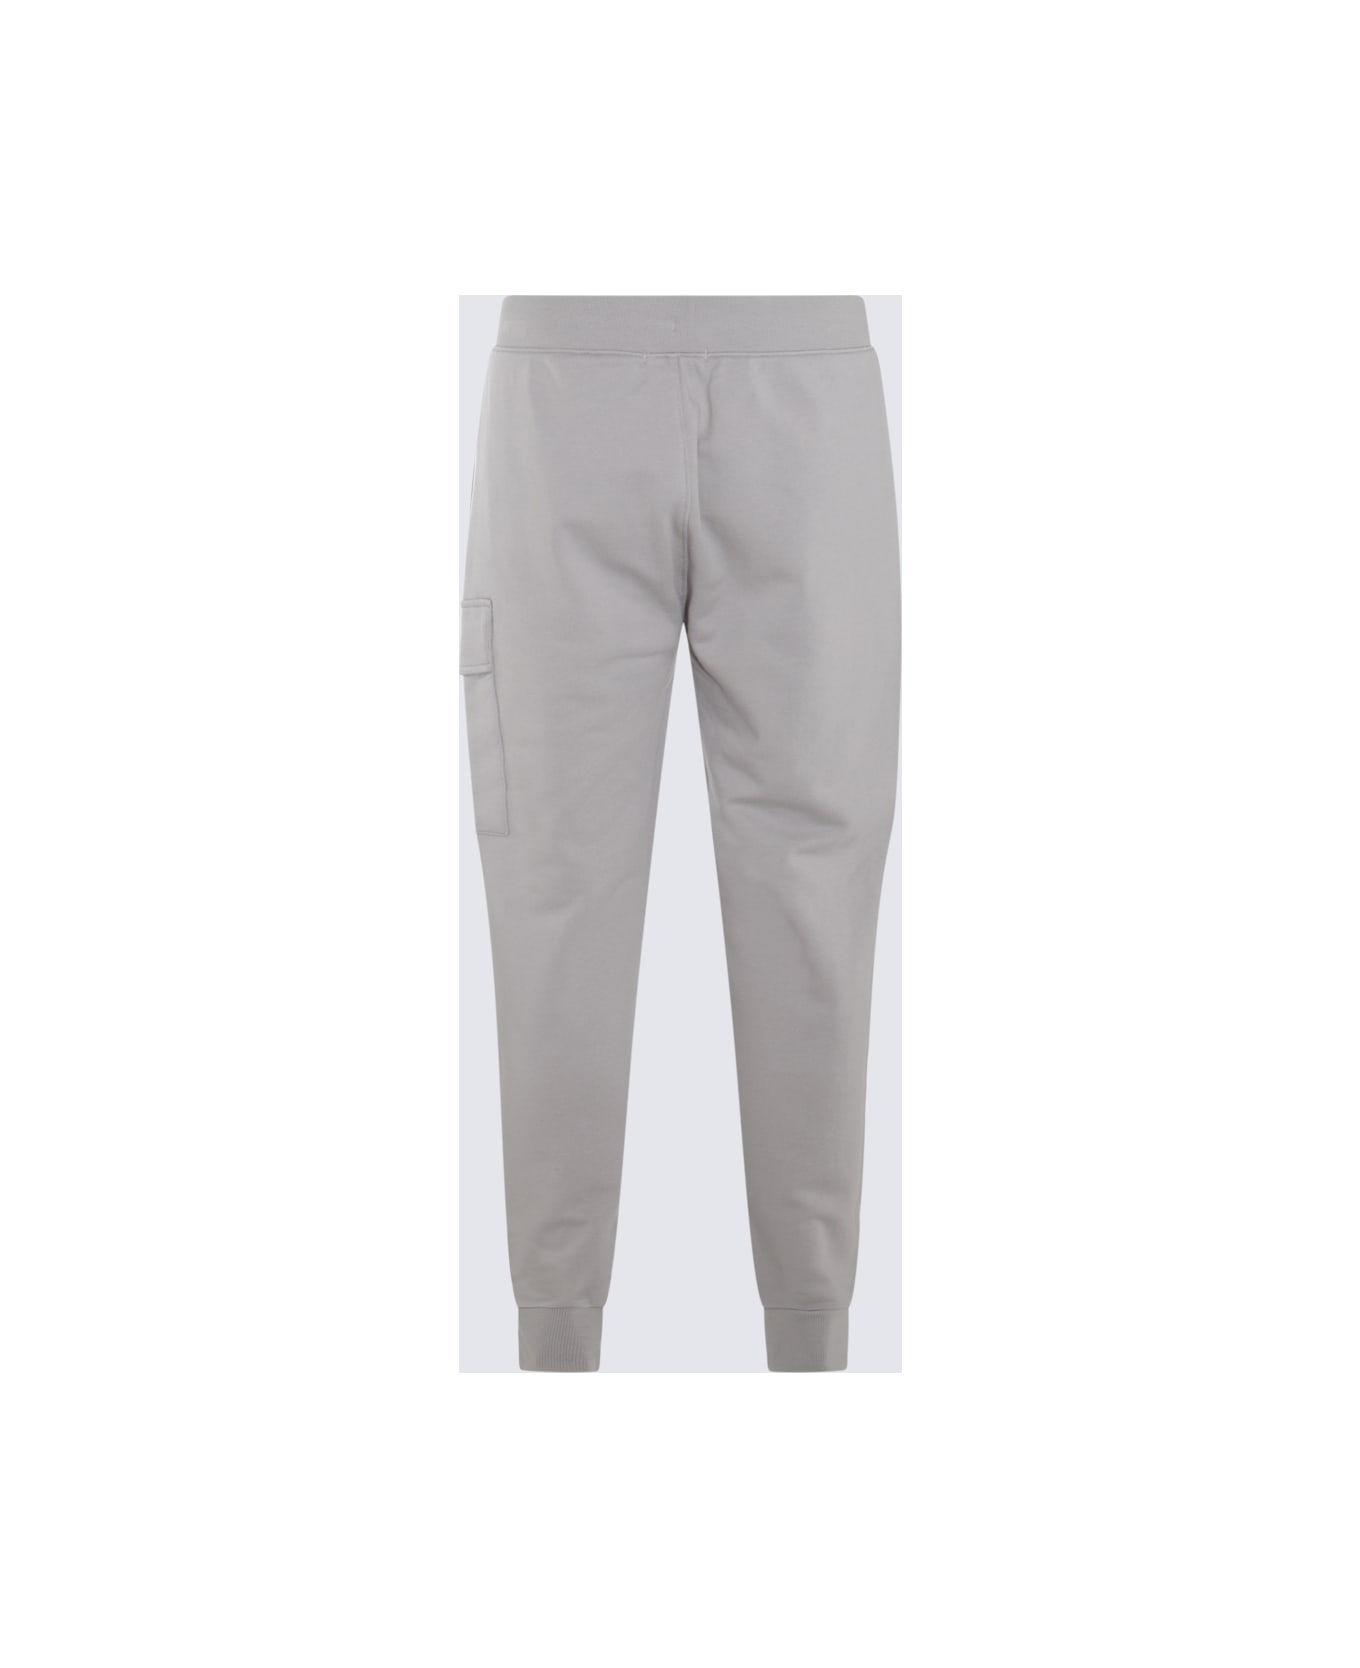 C.P. Company Light Grey Cotton Track Pants - DRIZZLE